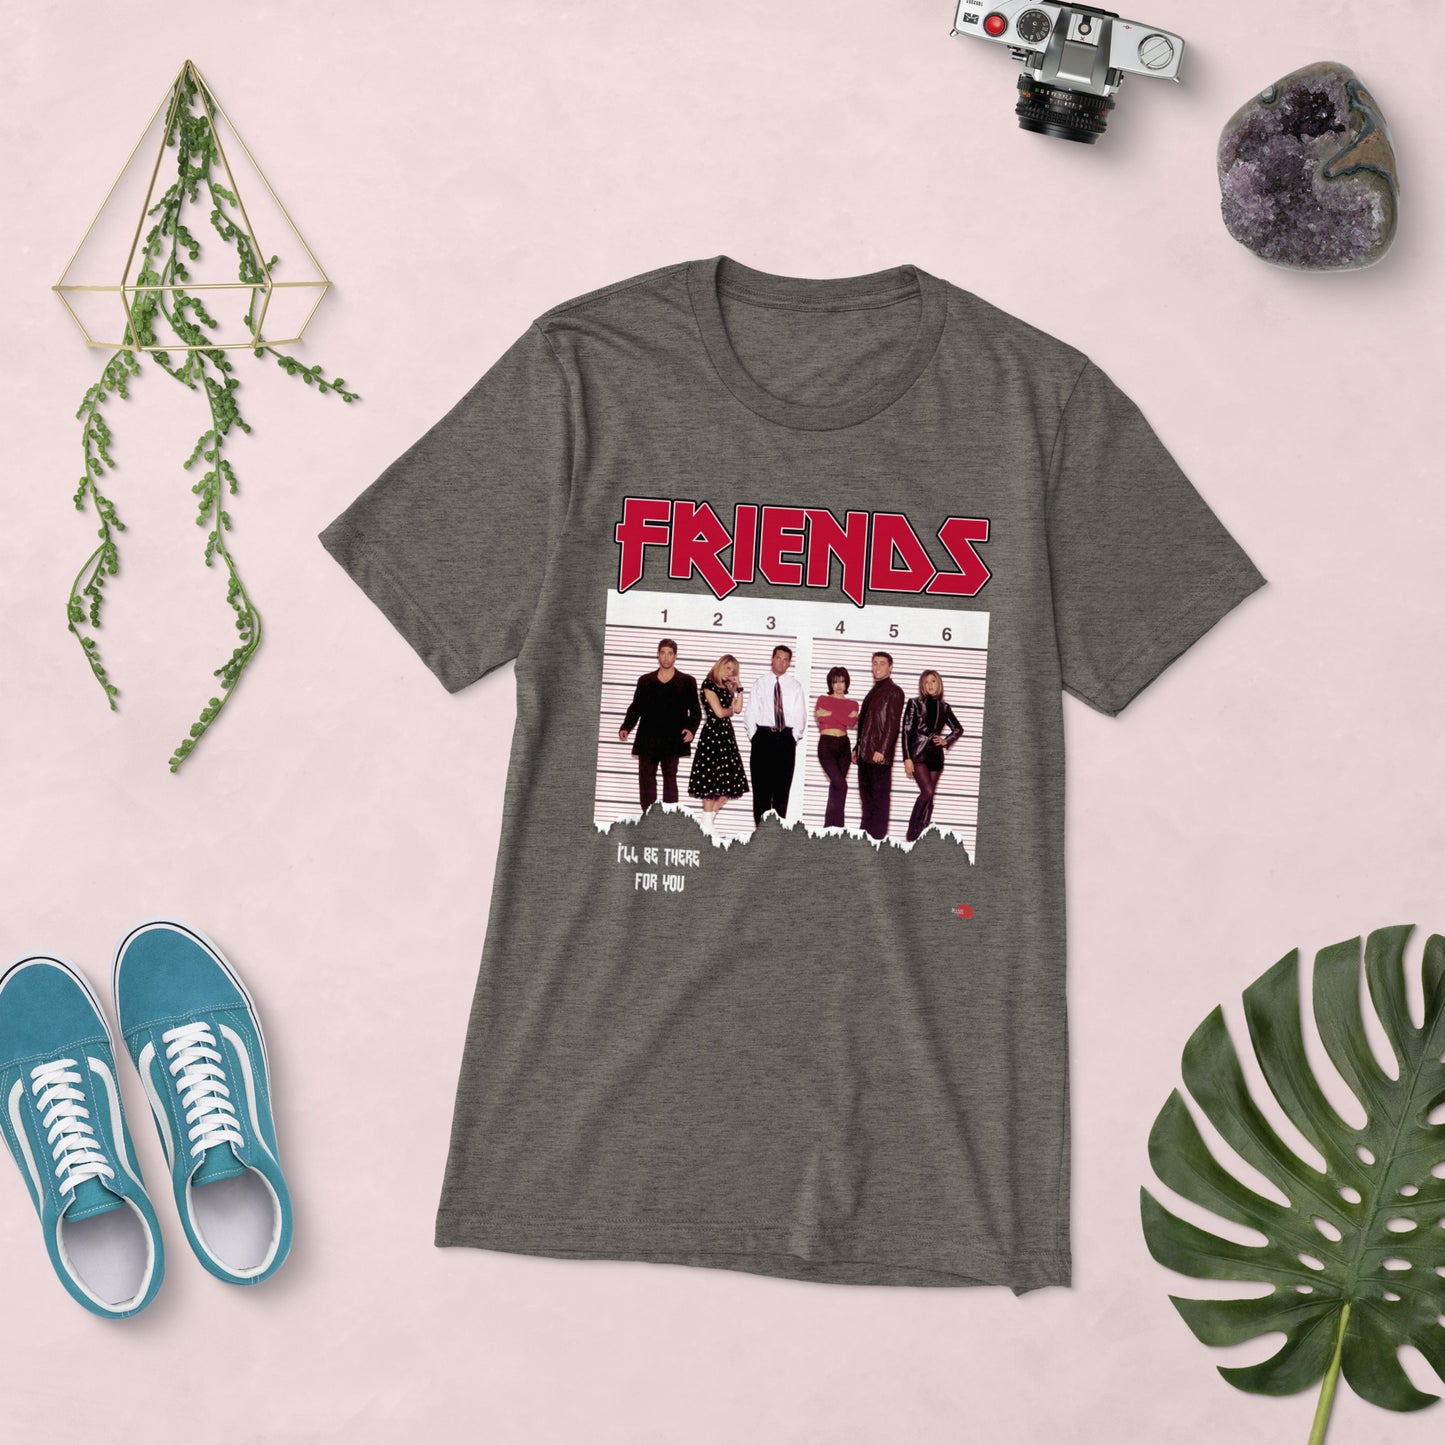 Friends 'Band Tee' Tour 94 KiSS Short sleeve t-shirt - New York City Tour Rock theme tv show